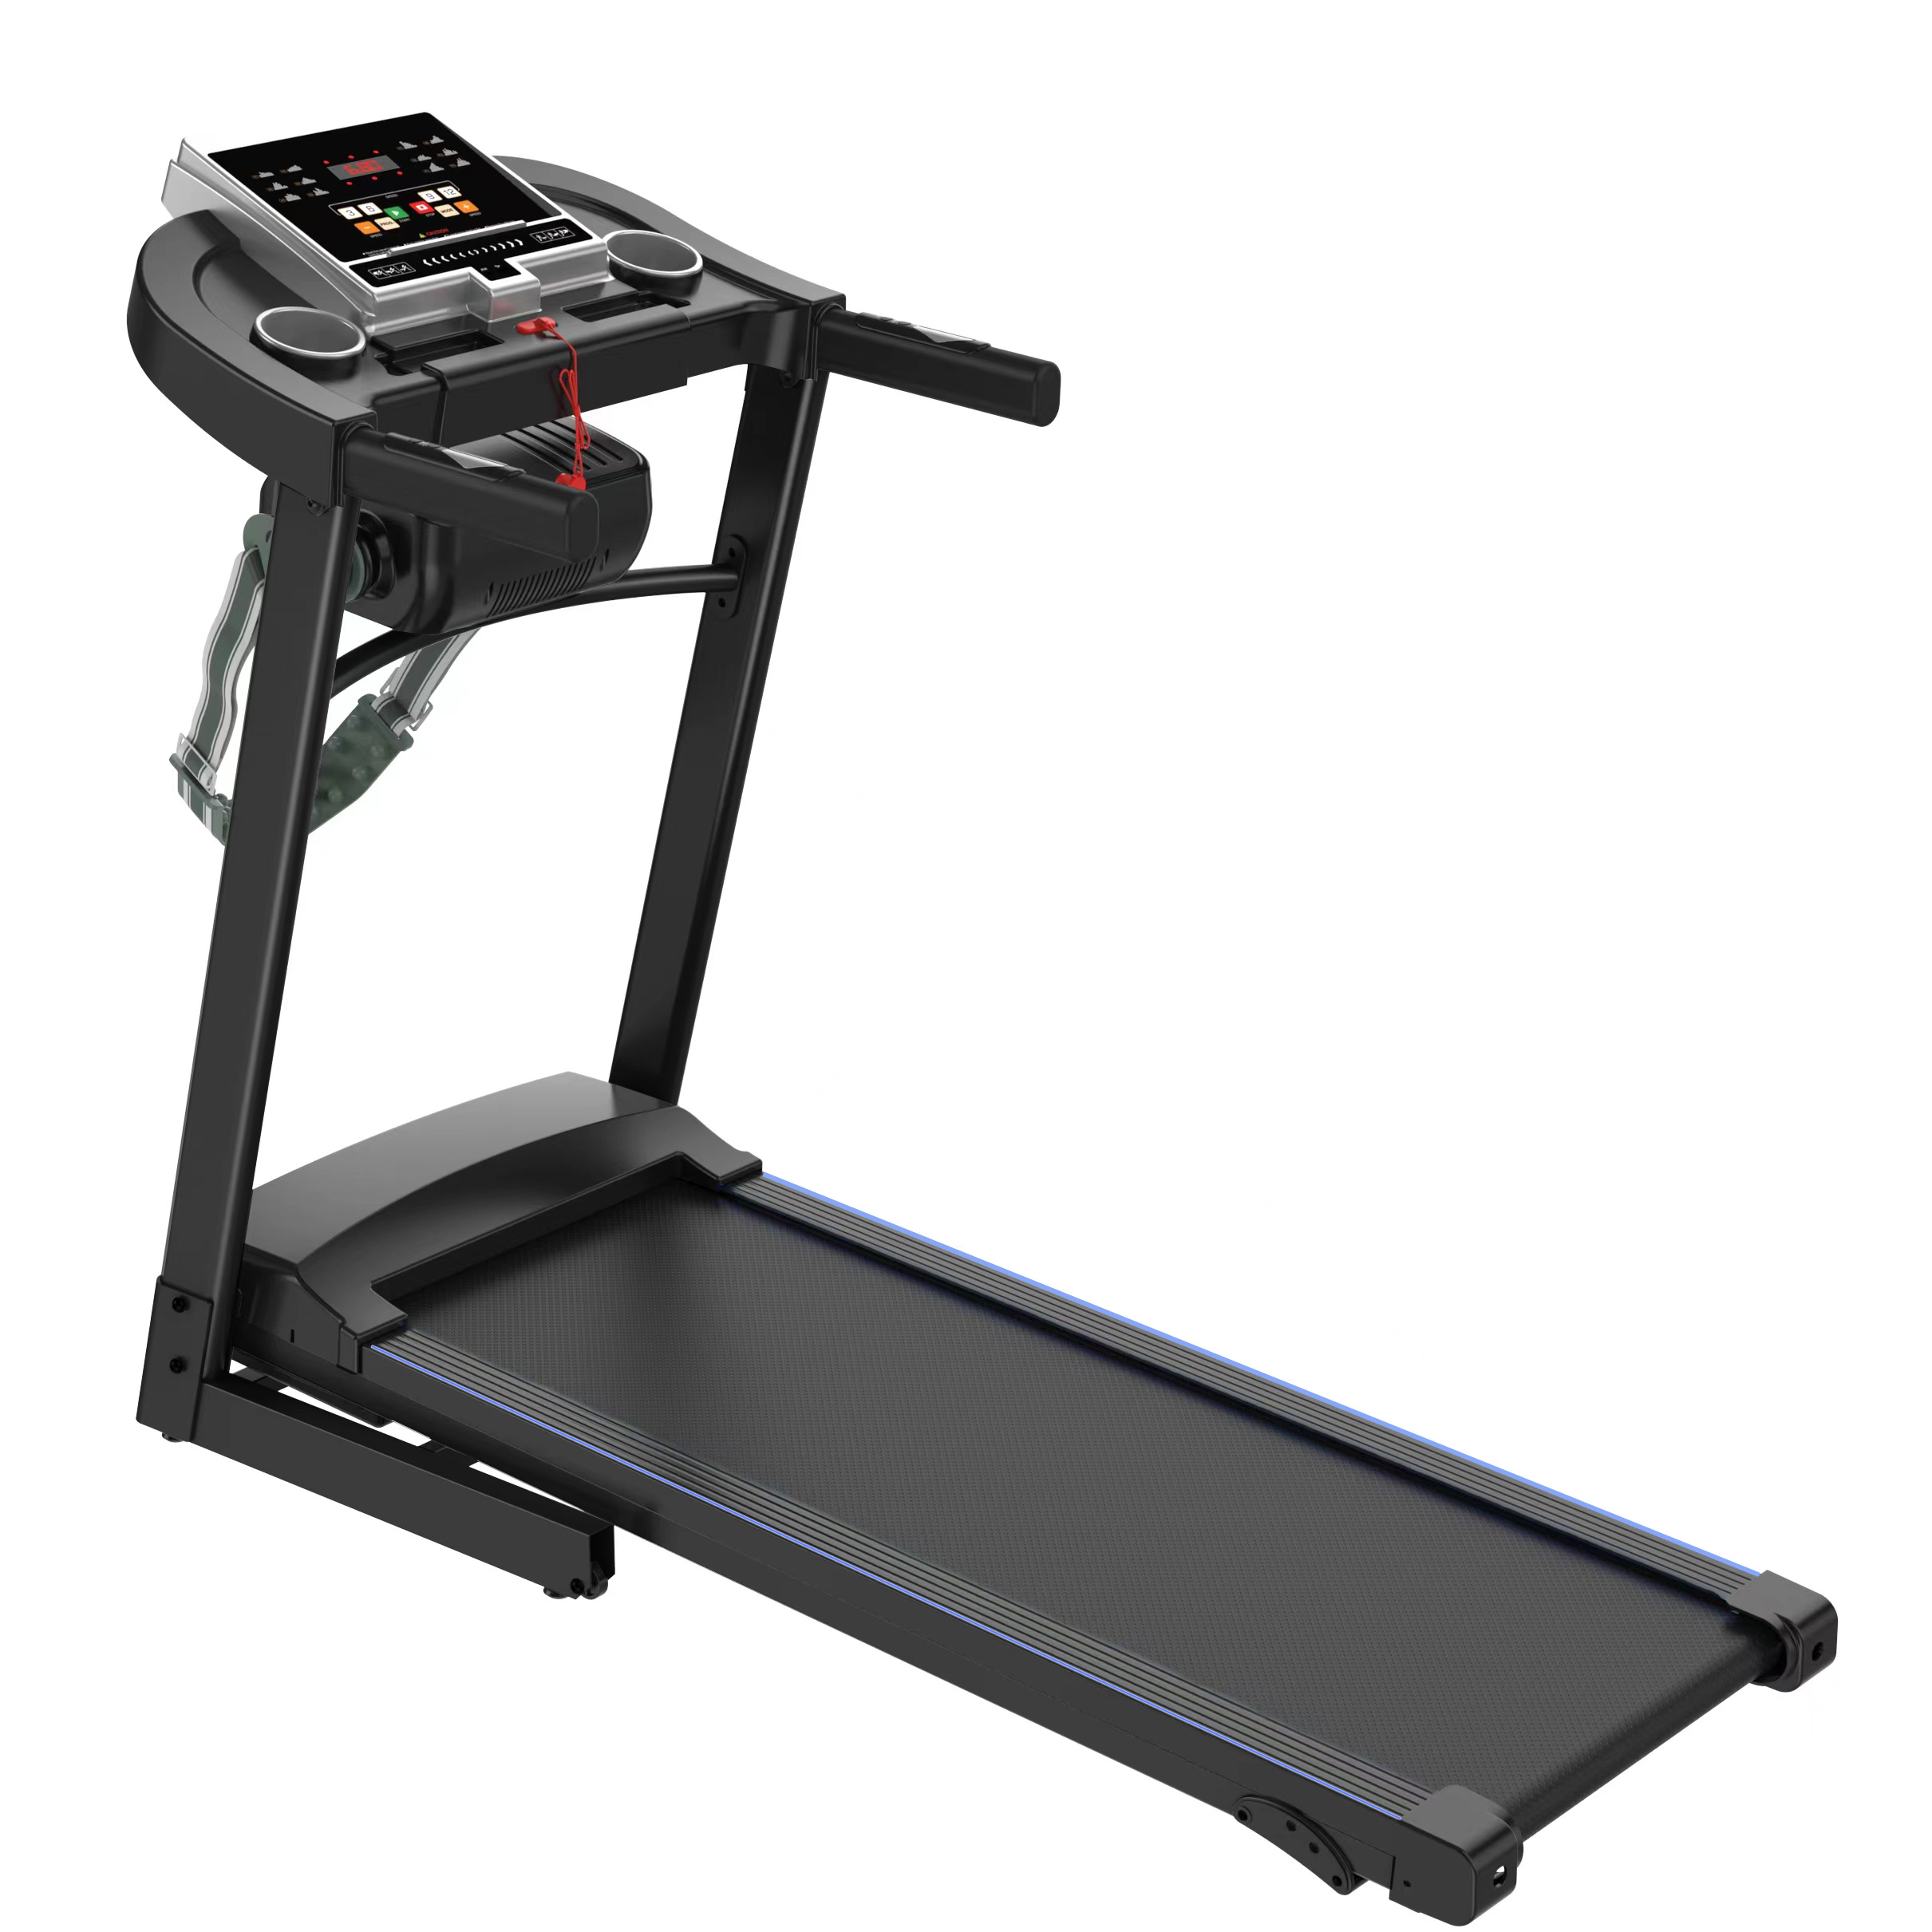 New deisgn treadmill with 400*1100mm